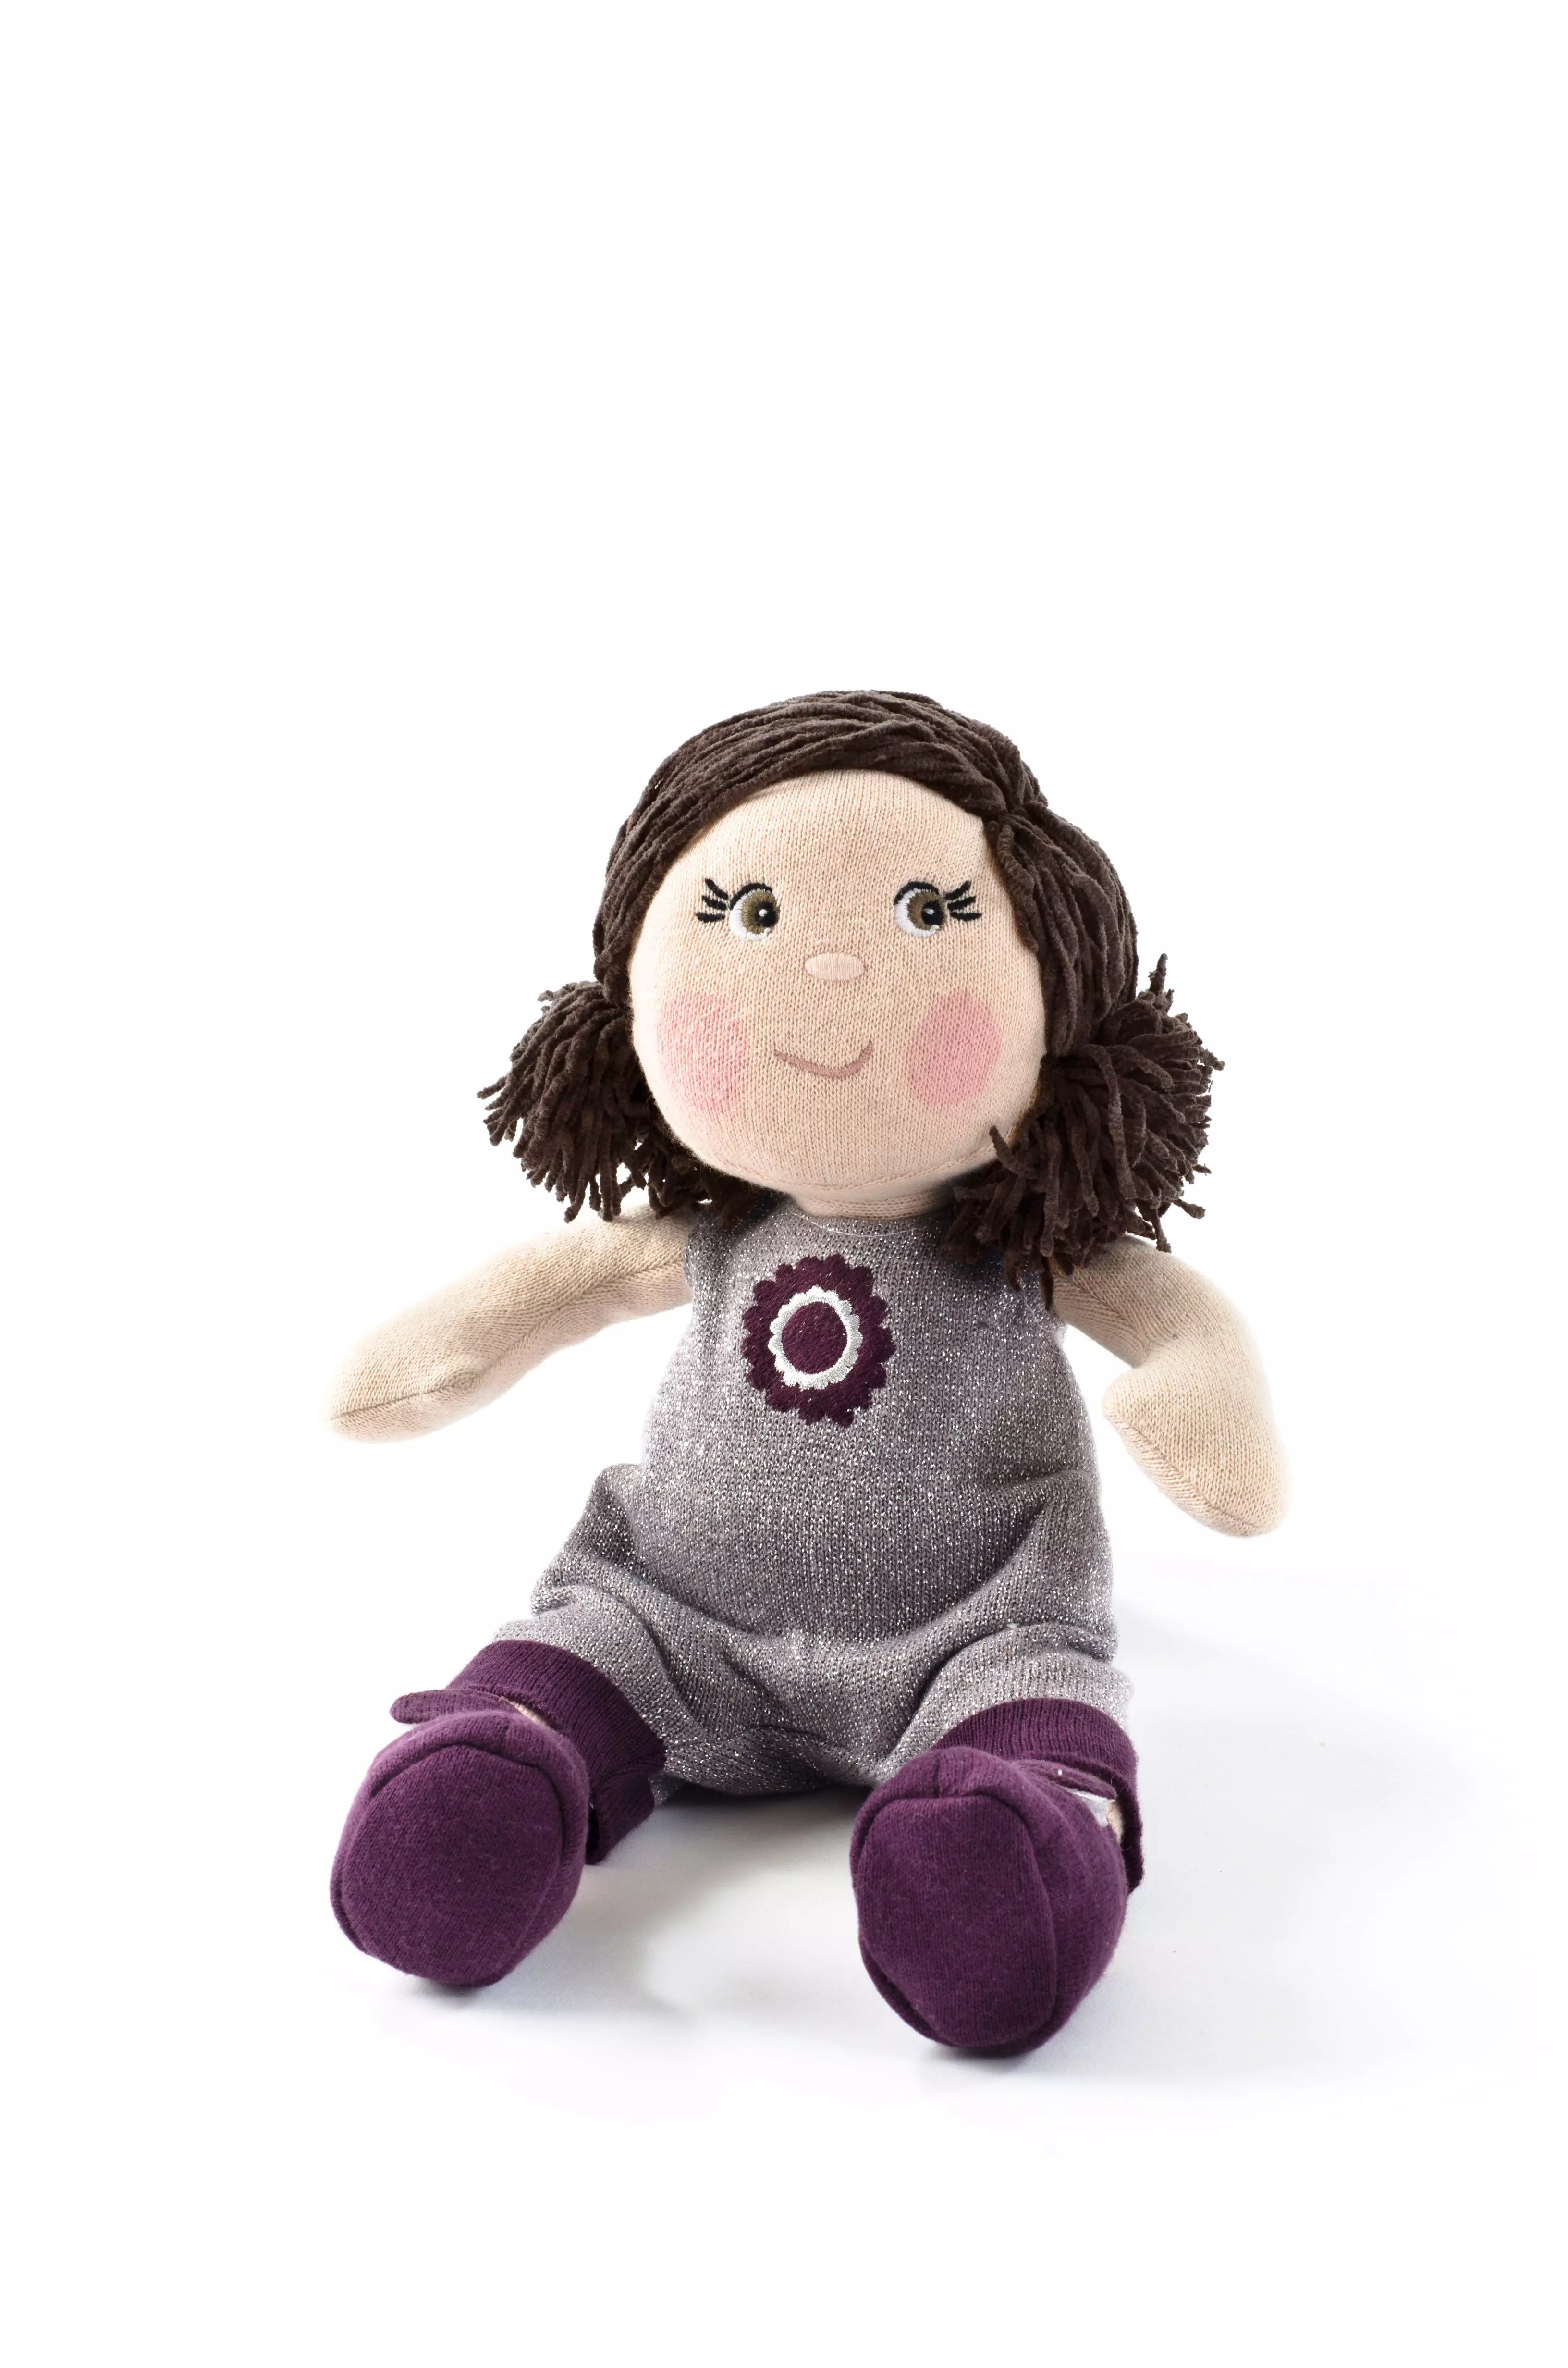 Smallstuff Knitted Doll Cm Luna